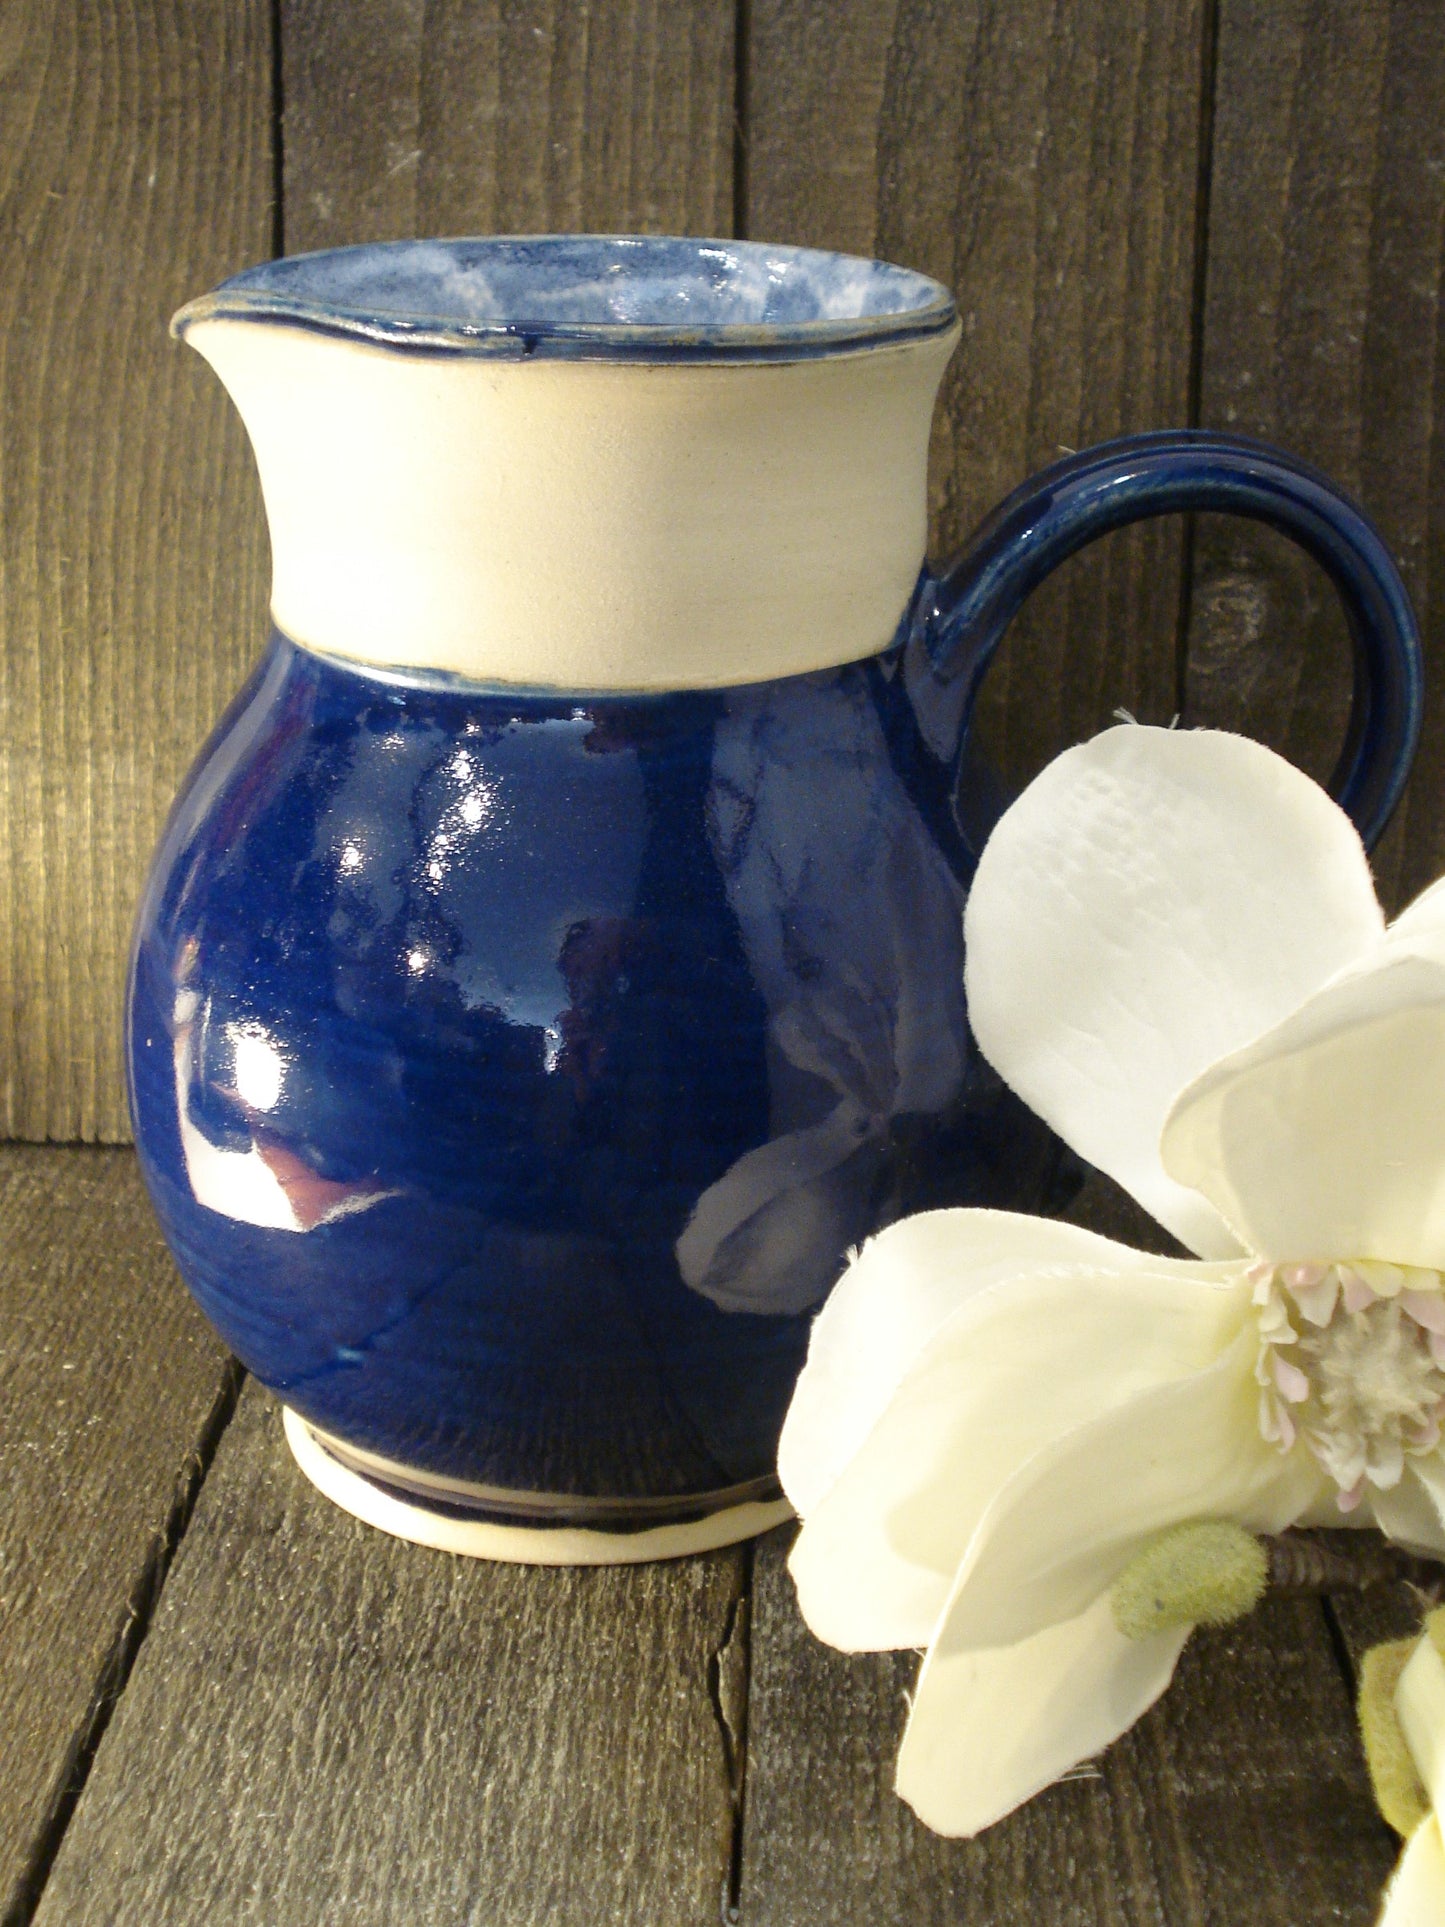 Stor keramik blåkande.